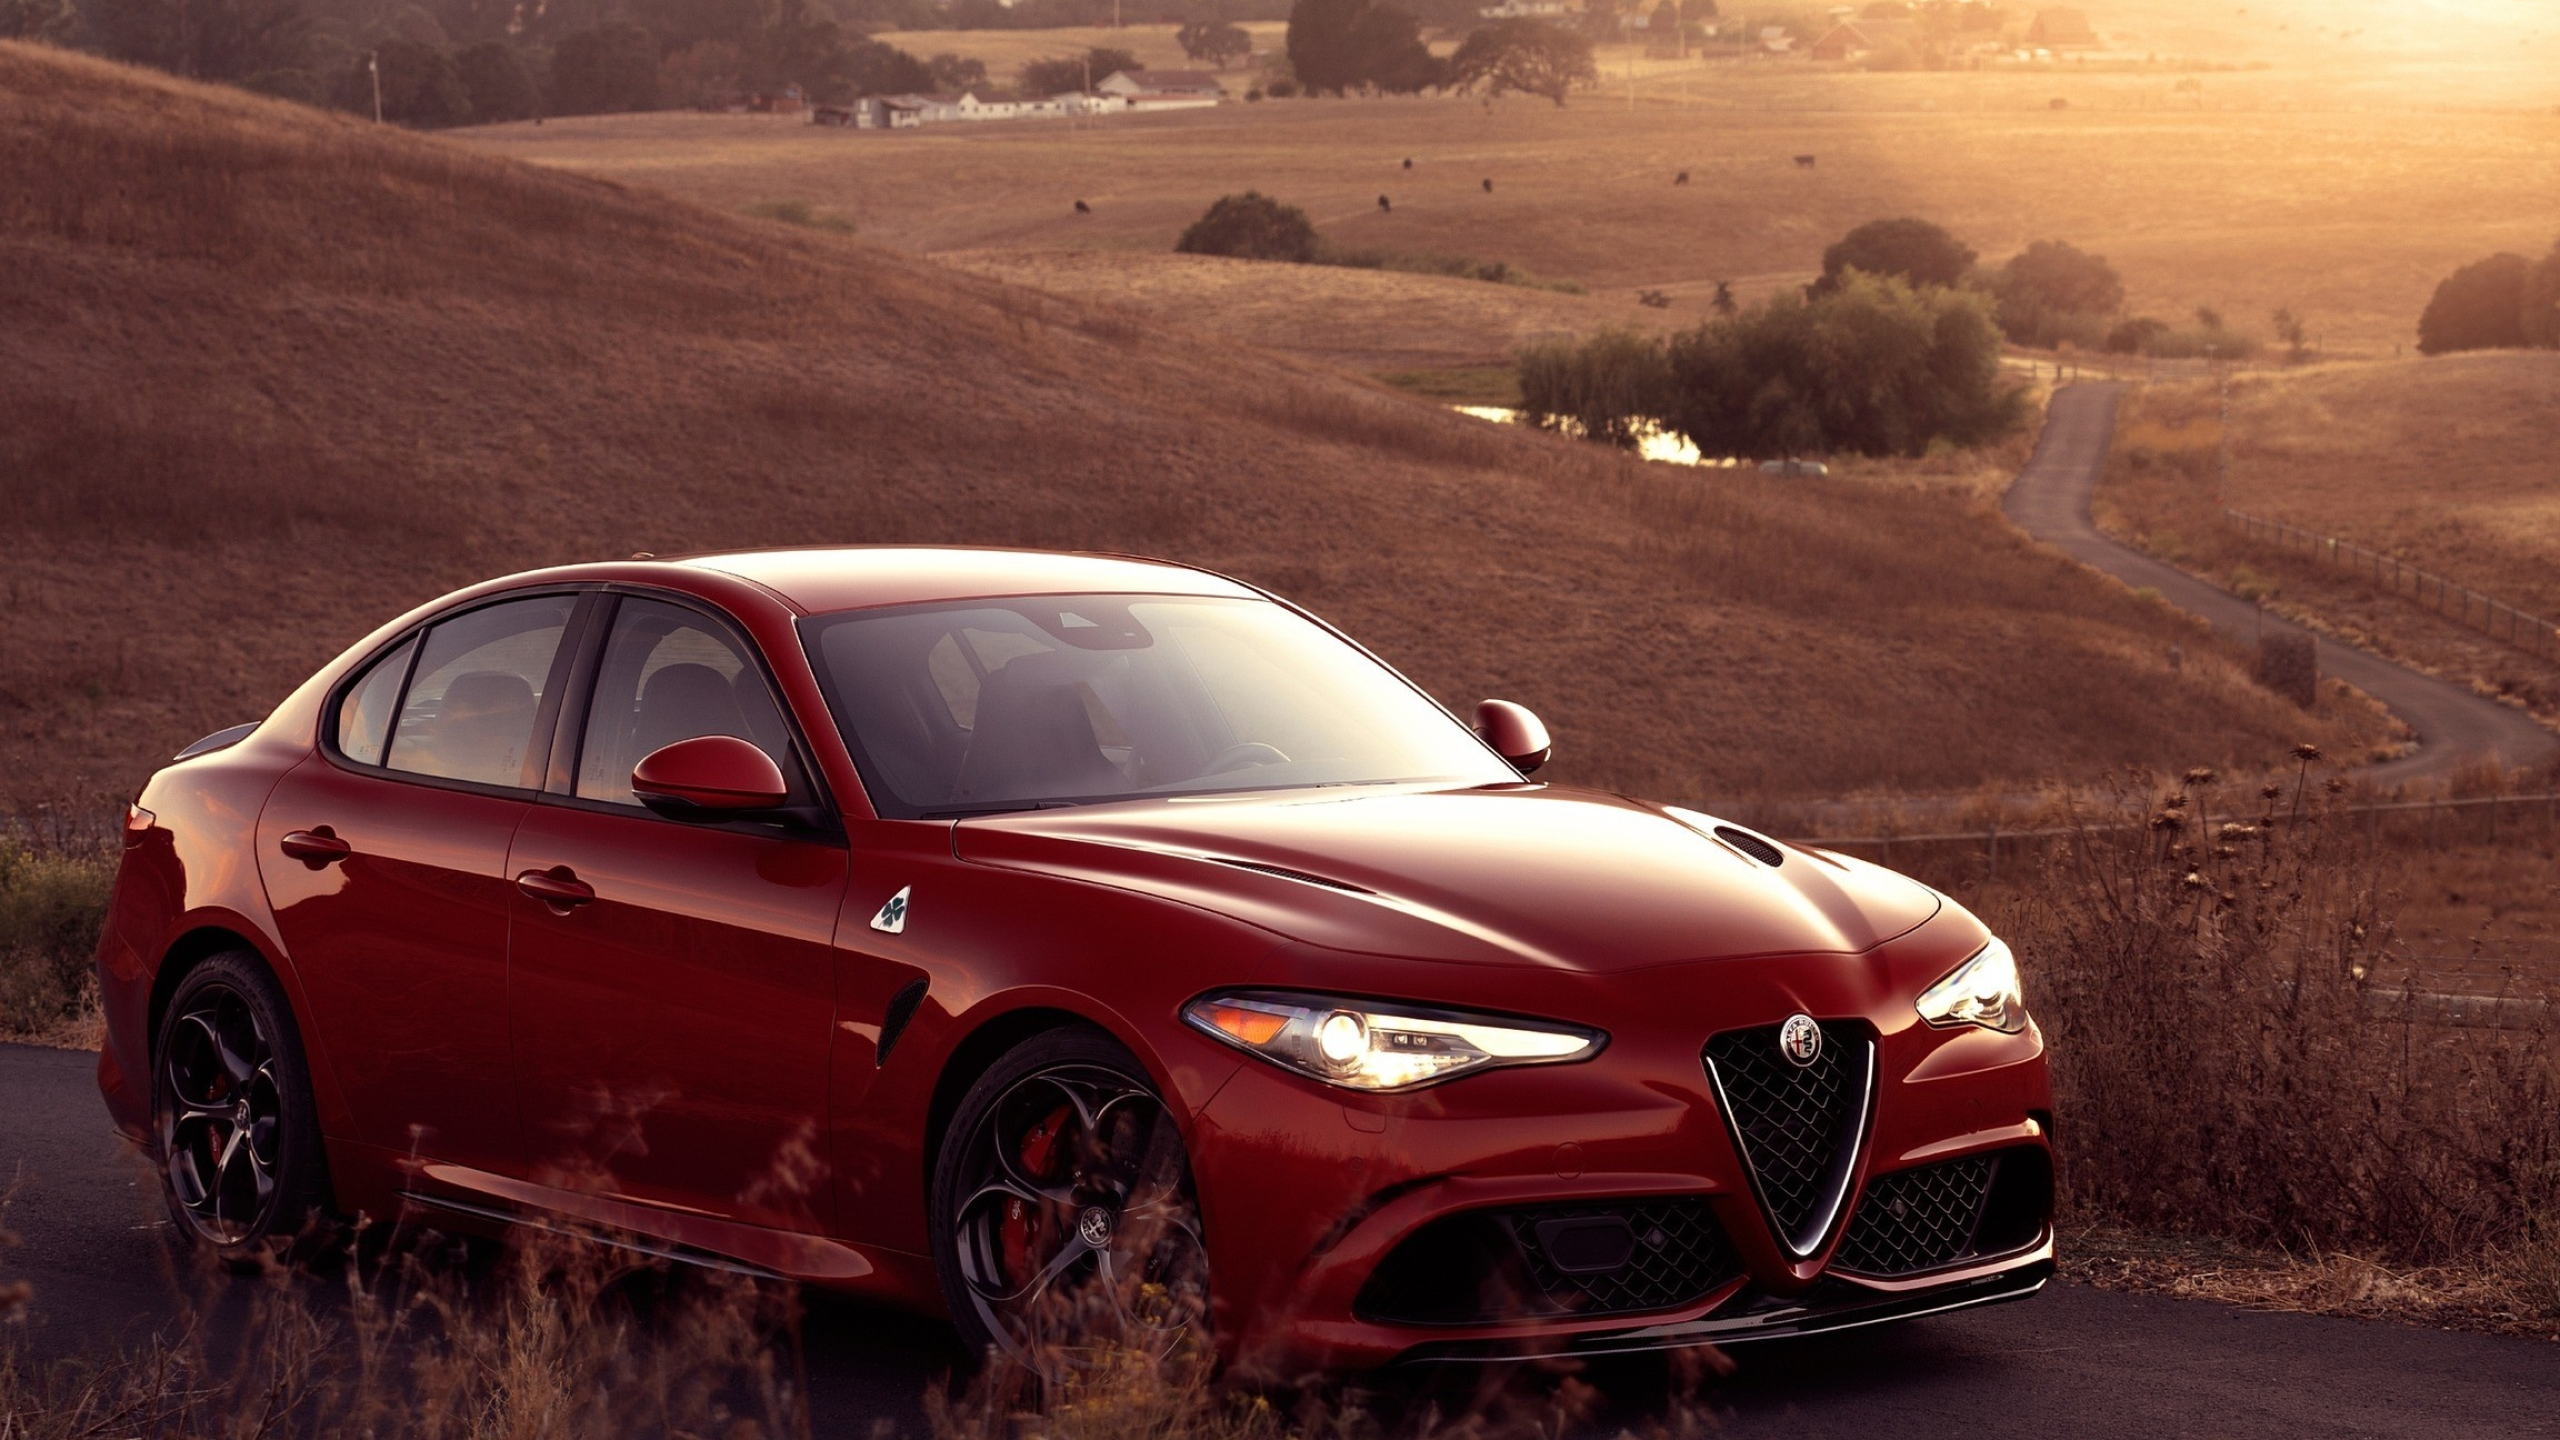 Alfa Romeo HD, HD wallpapers, High-performance, Italian elegance, 2560x1440 HD Desktop